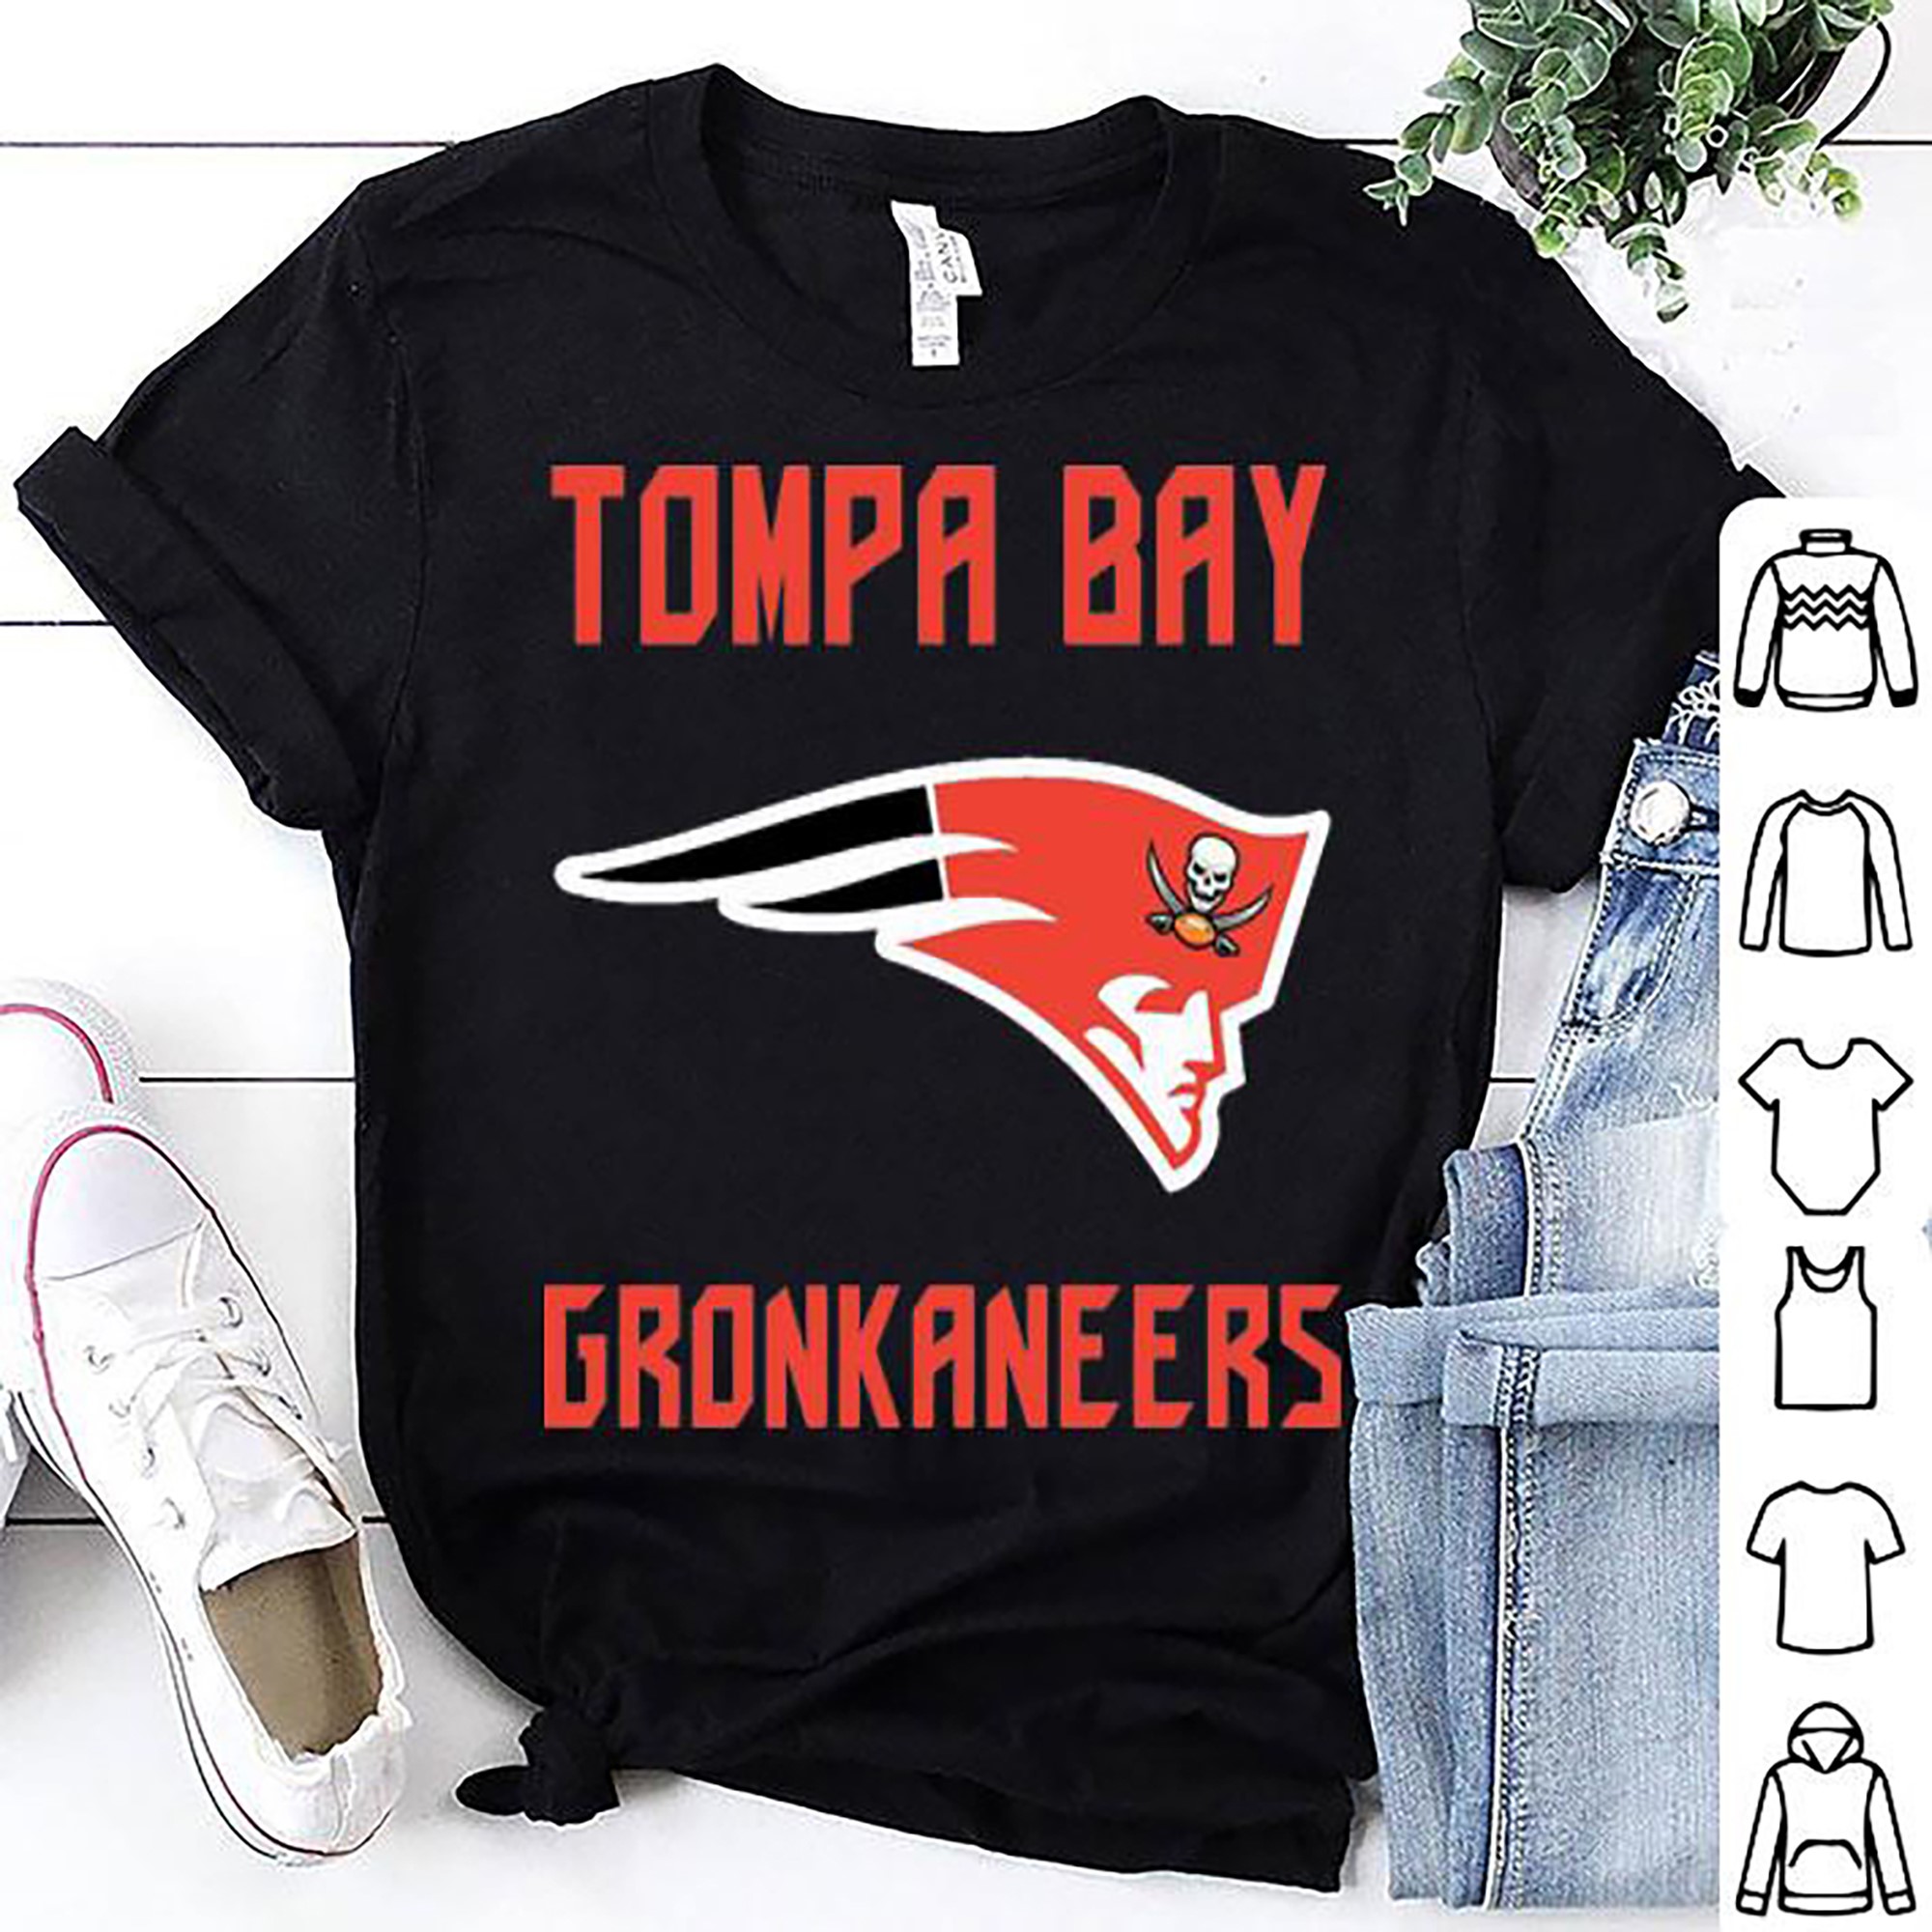 Tompa Bay Gronkaneers Shirt